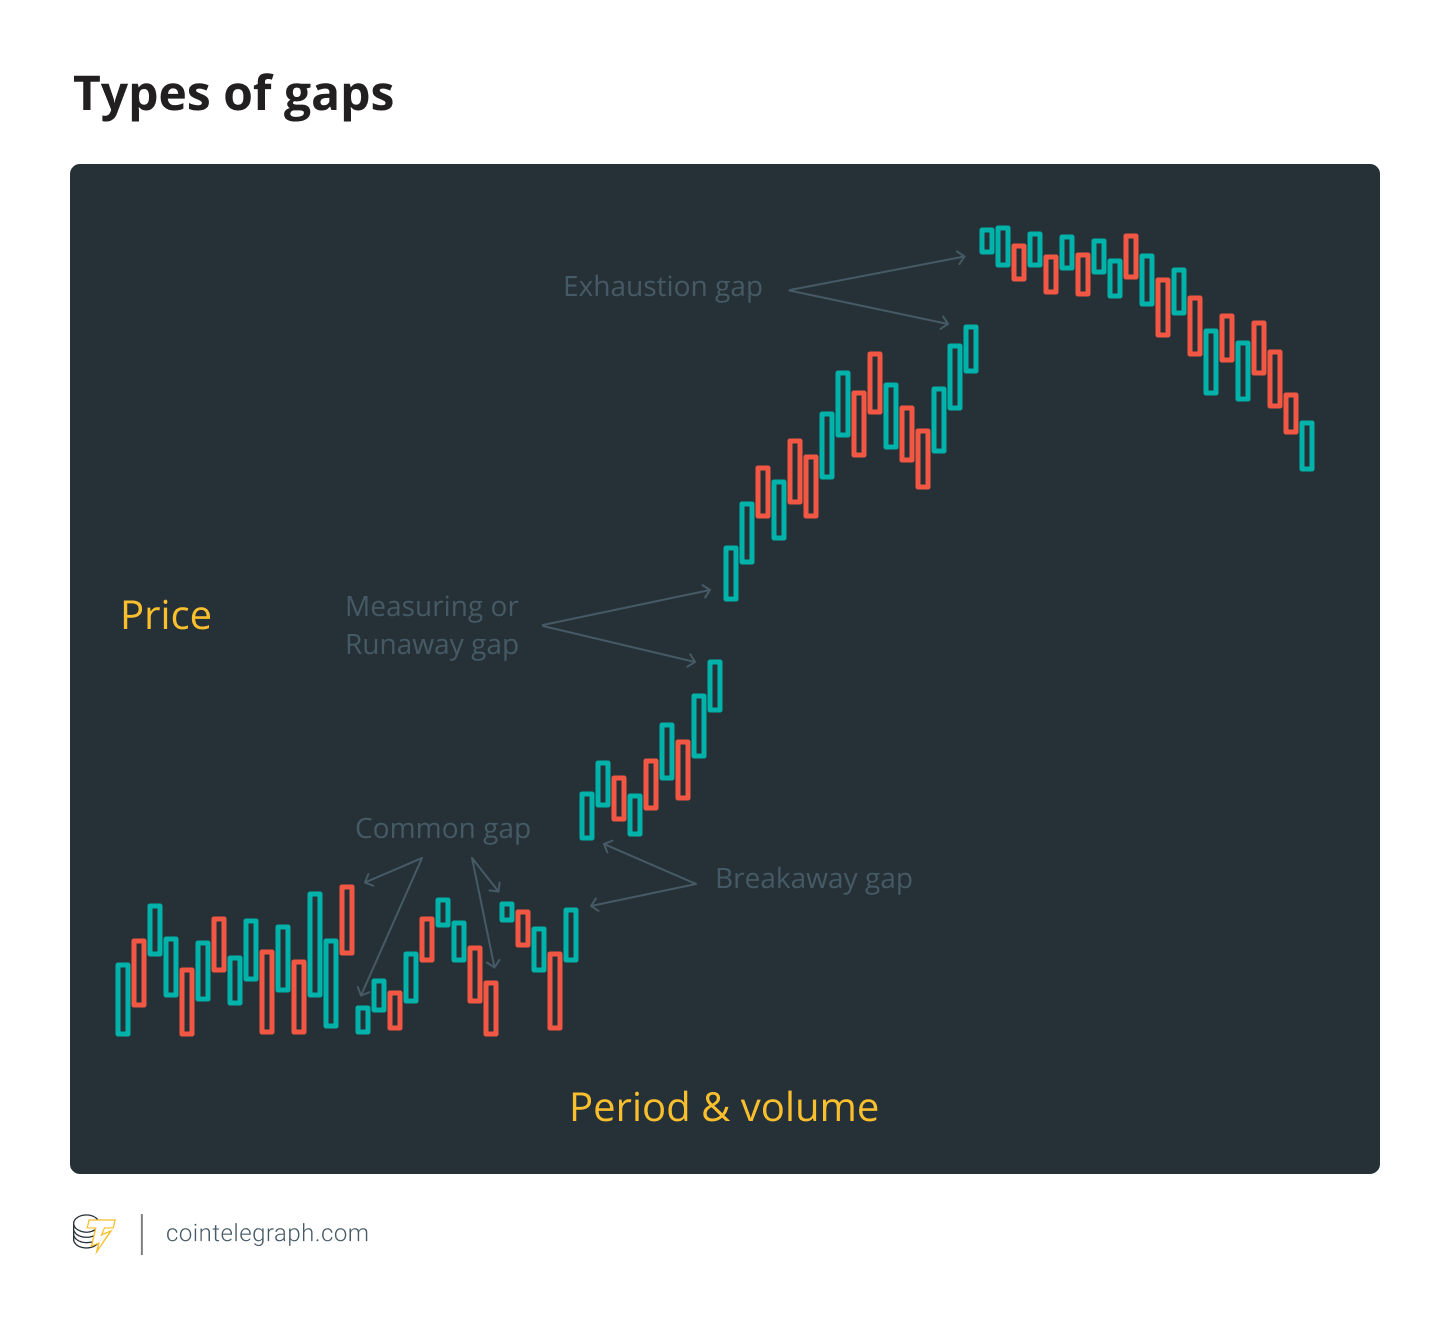 Types of gaps